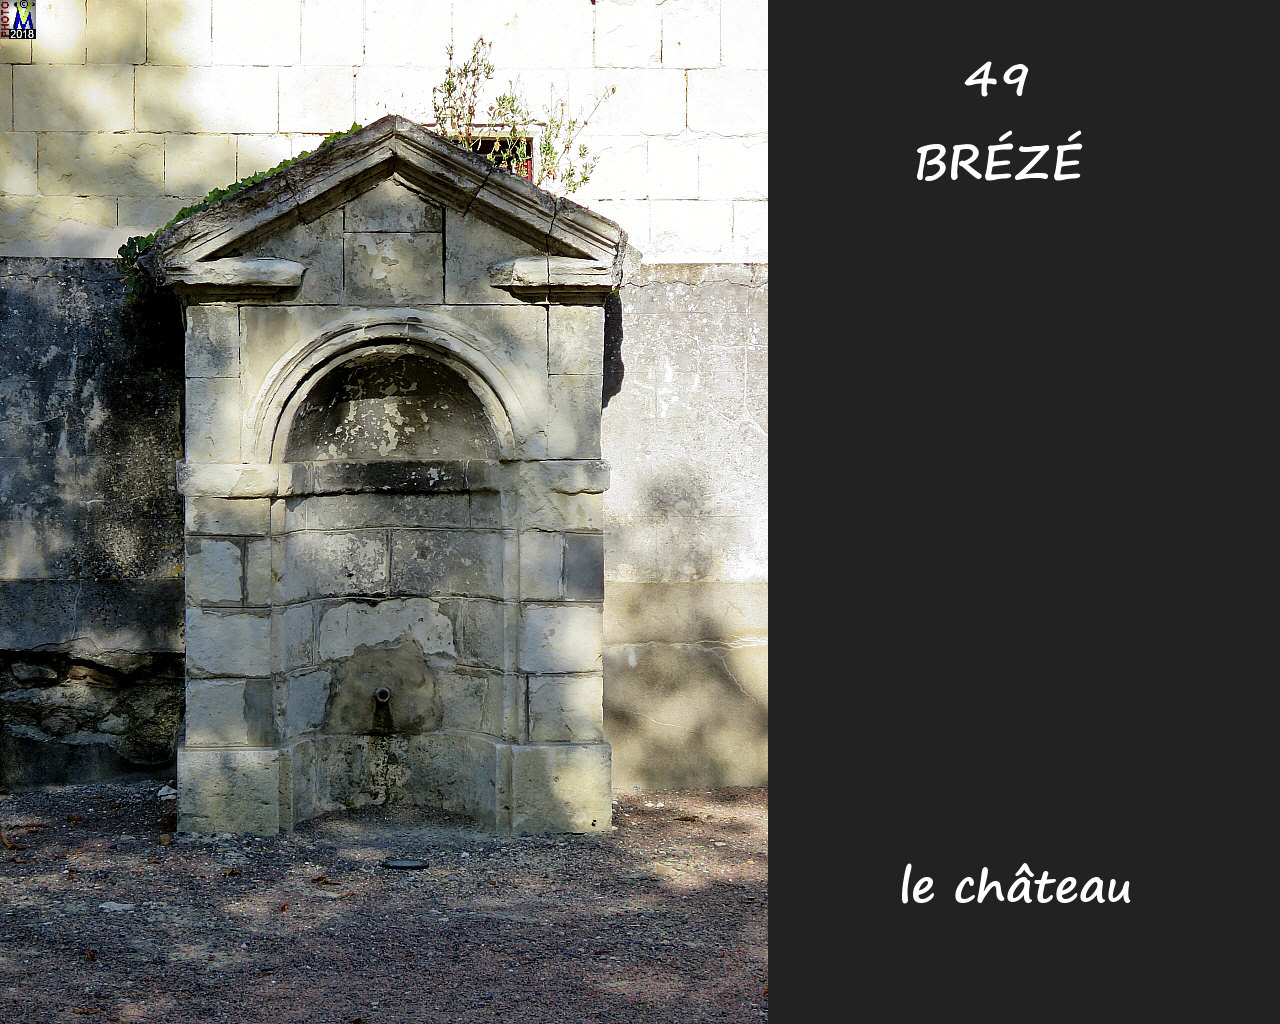 49BREZE_chateau_1512.jpg